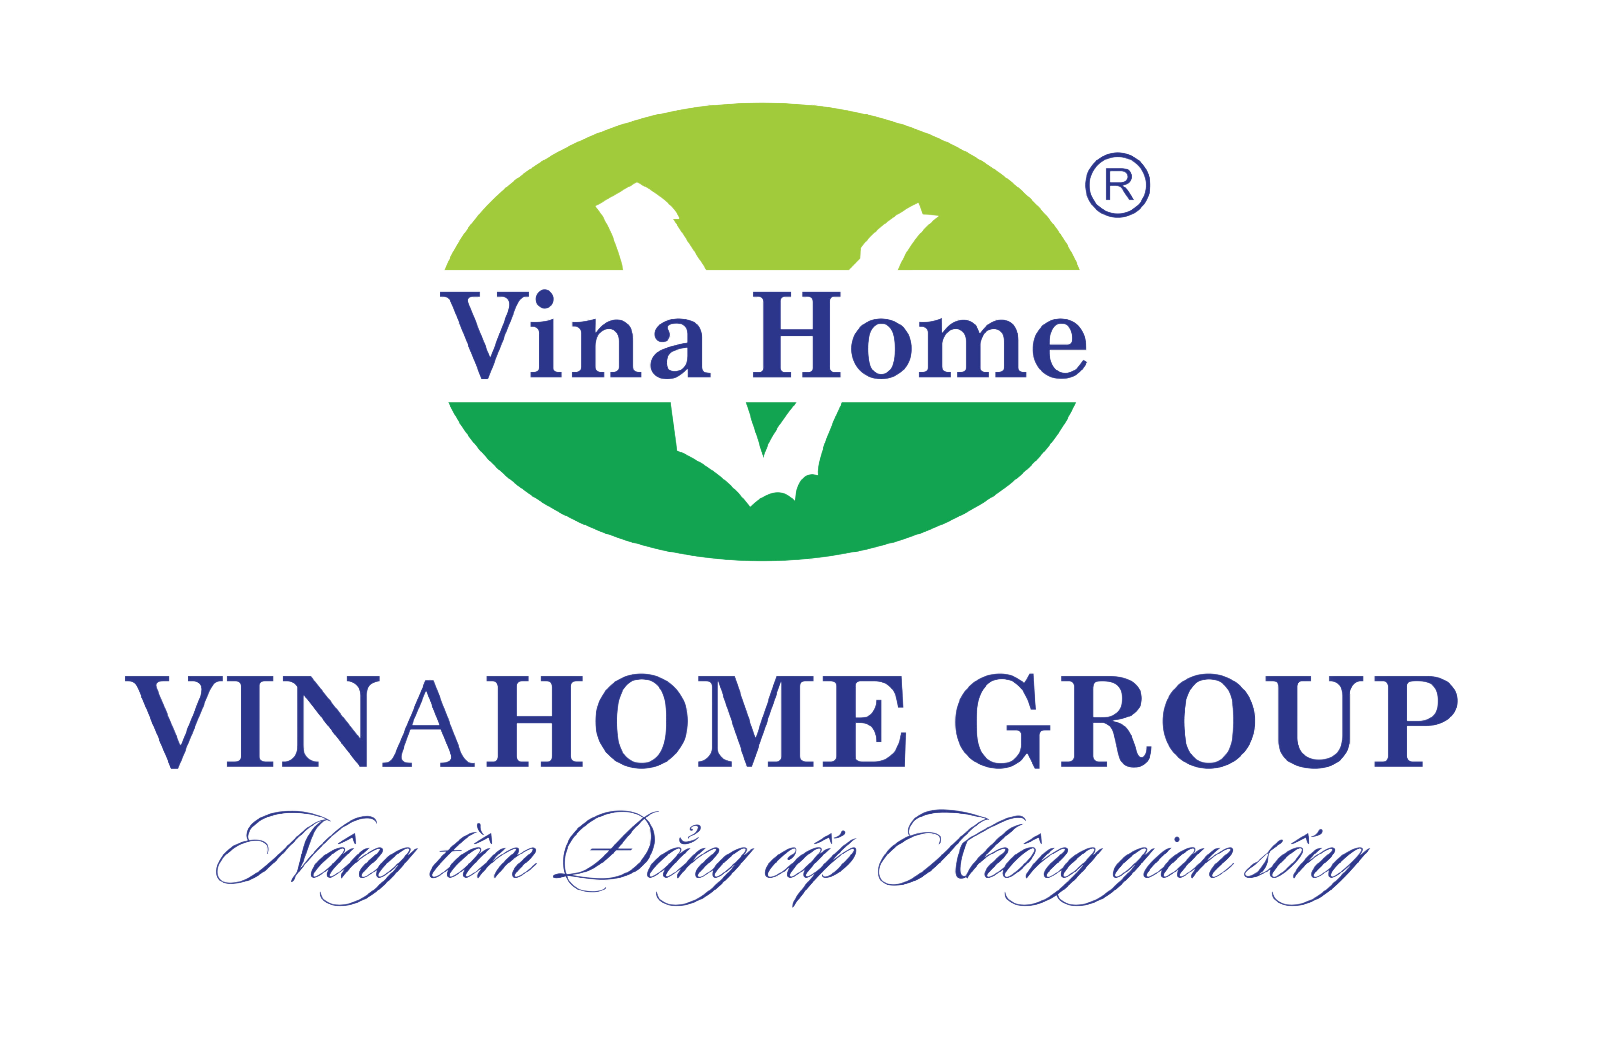 VinaHome Group